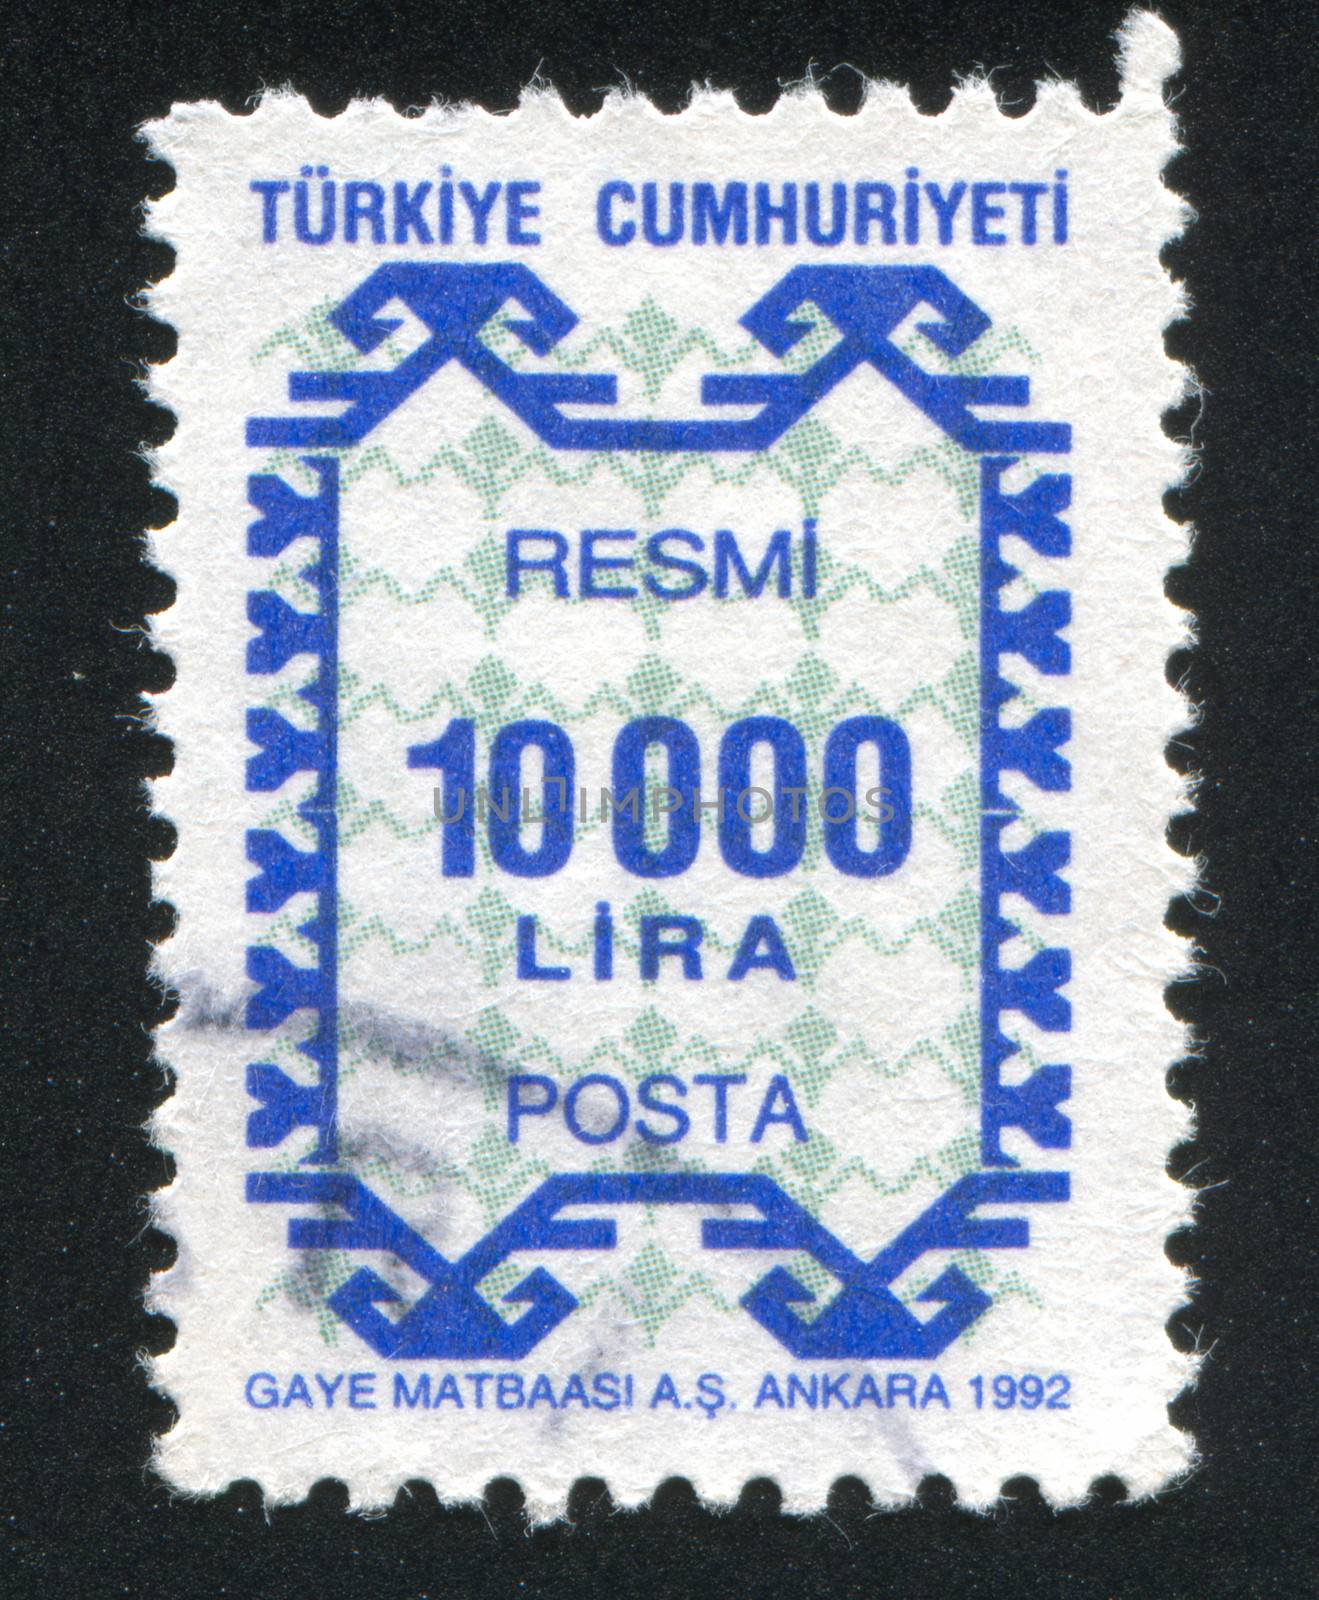 Turkish pattern by rook